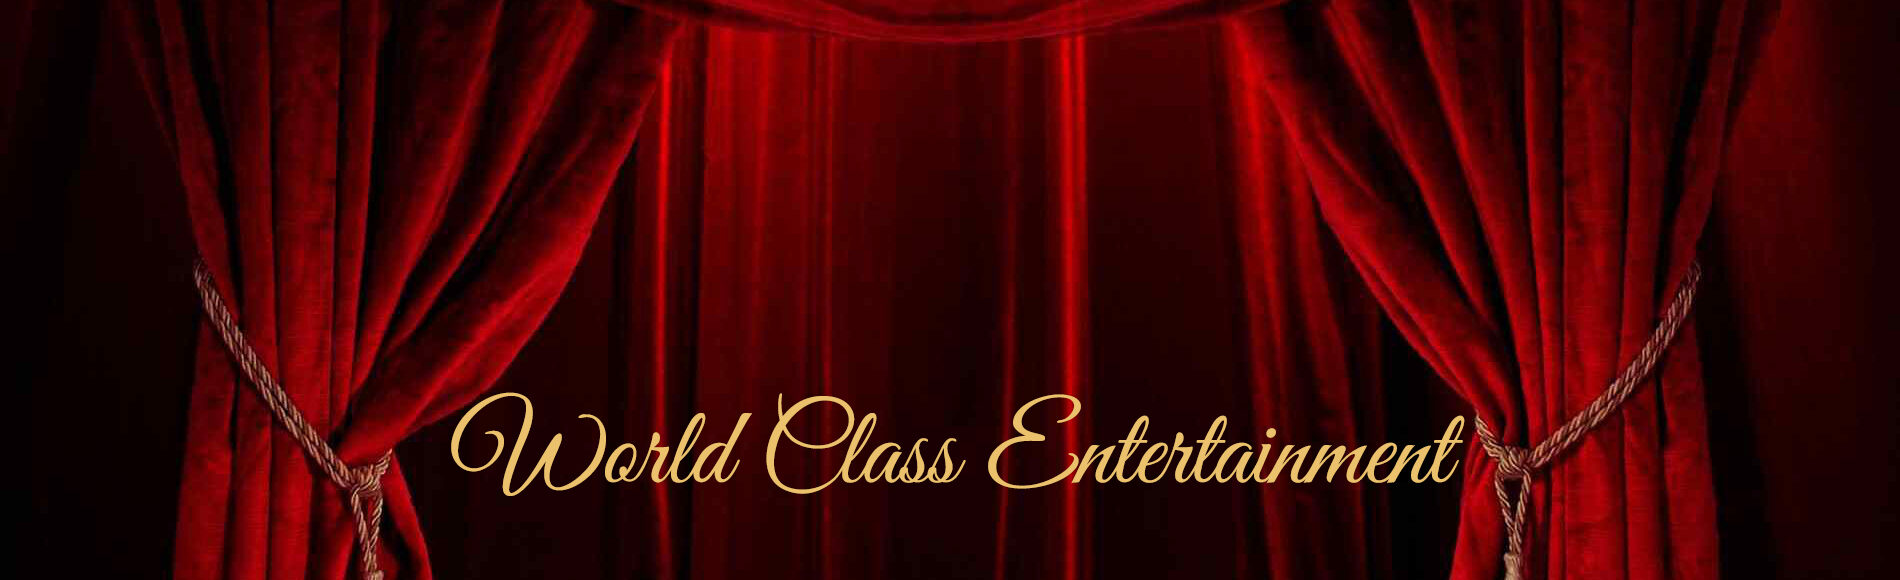 Golden Ticket Productions Main Curtain - World Class Entertainment